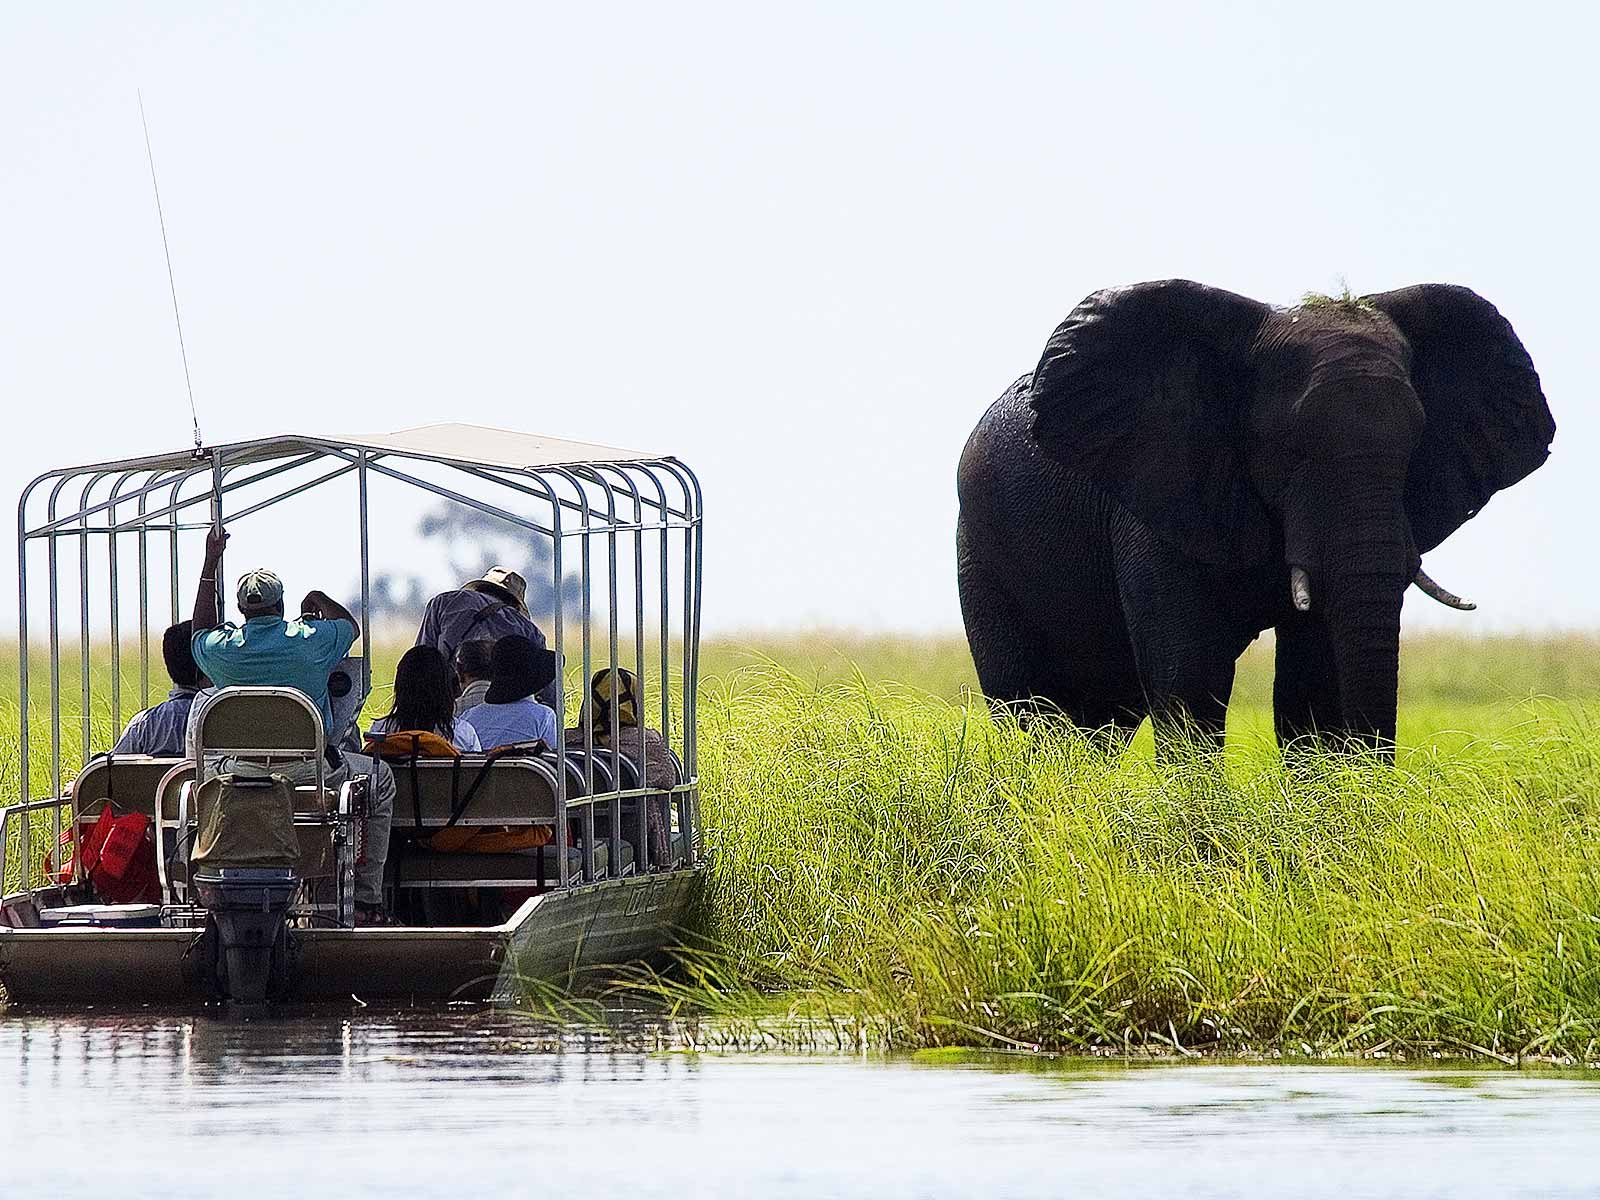 Discover Botswana Wildlife Safari with Victoria Falls